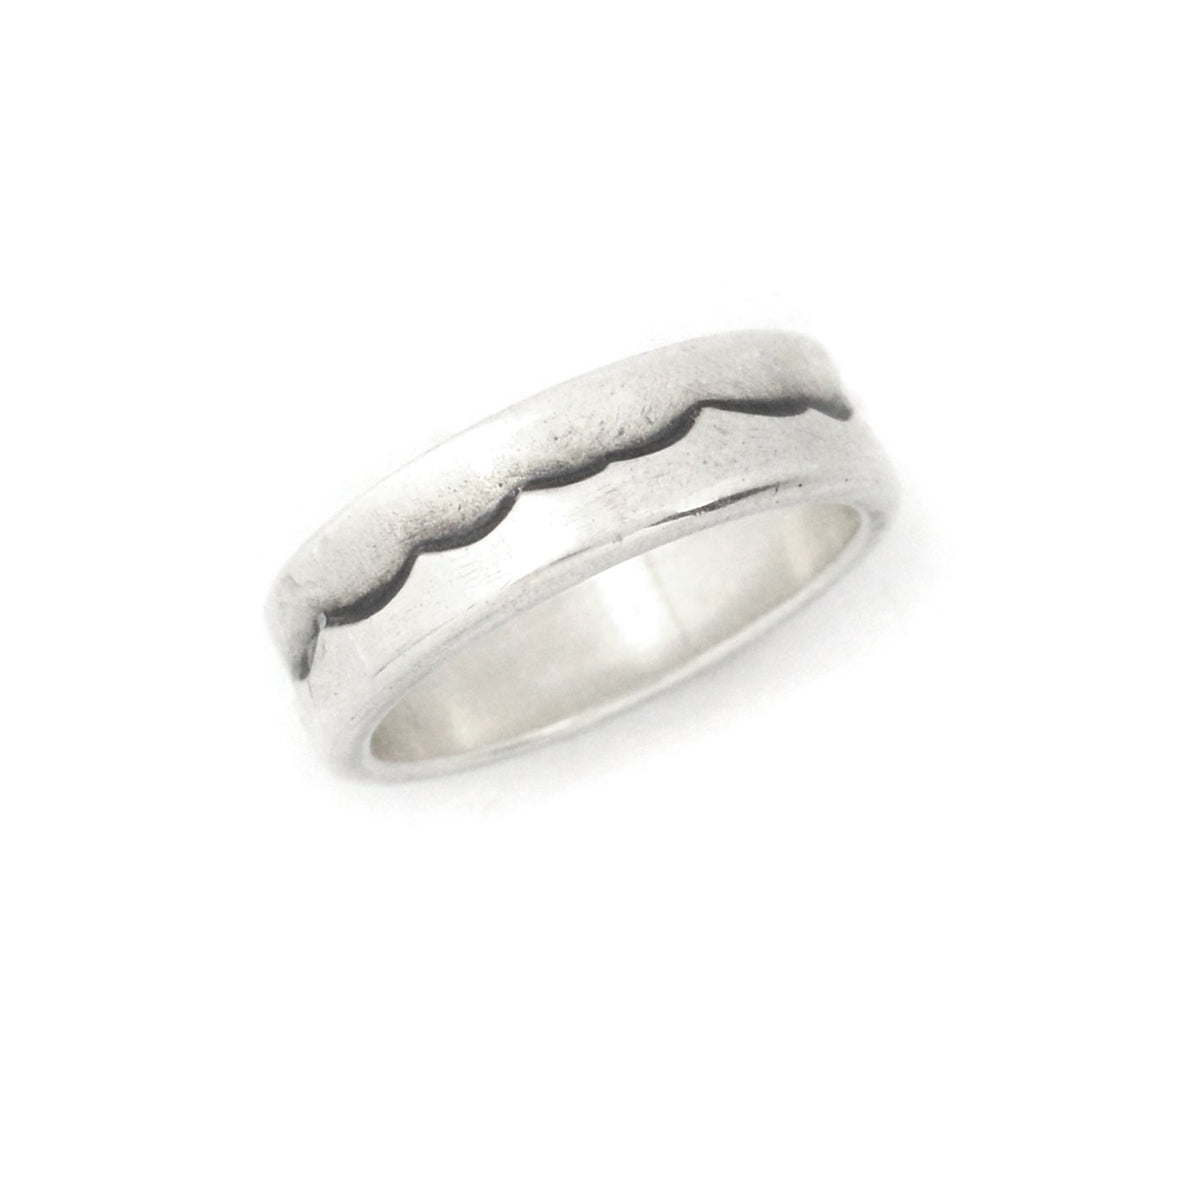 Silver Wave Ring - Wedding Ring 6mm / 4 6mm / 4.25 2016 - handmade by Beth Millner Jewelry